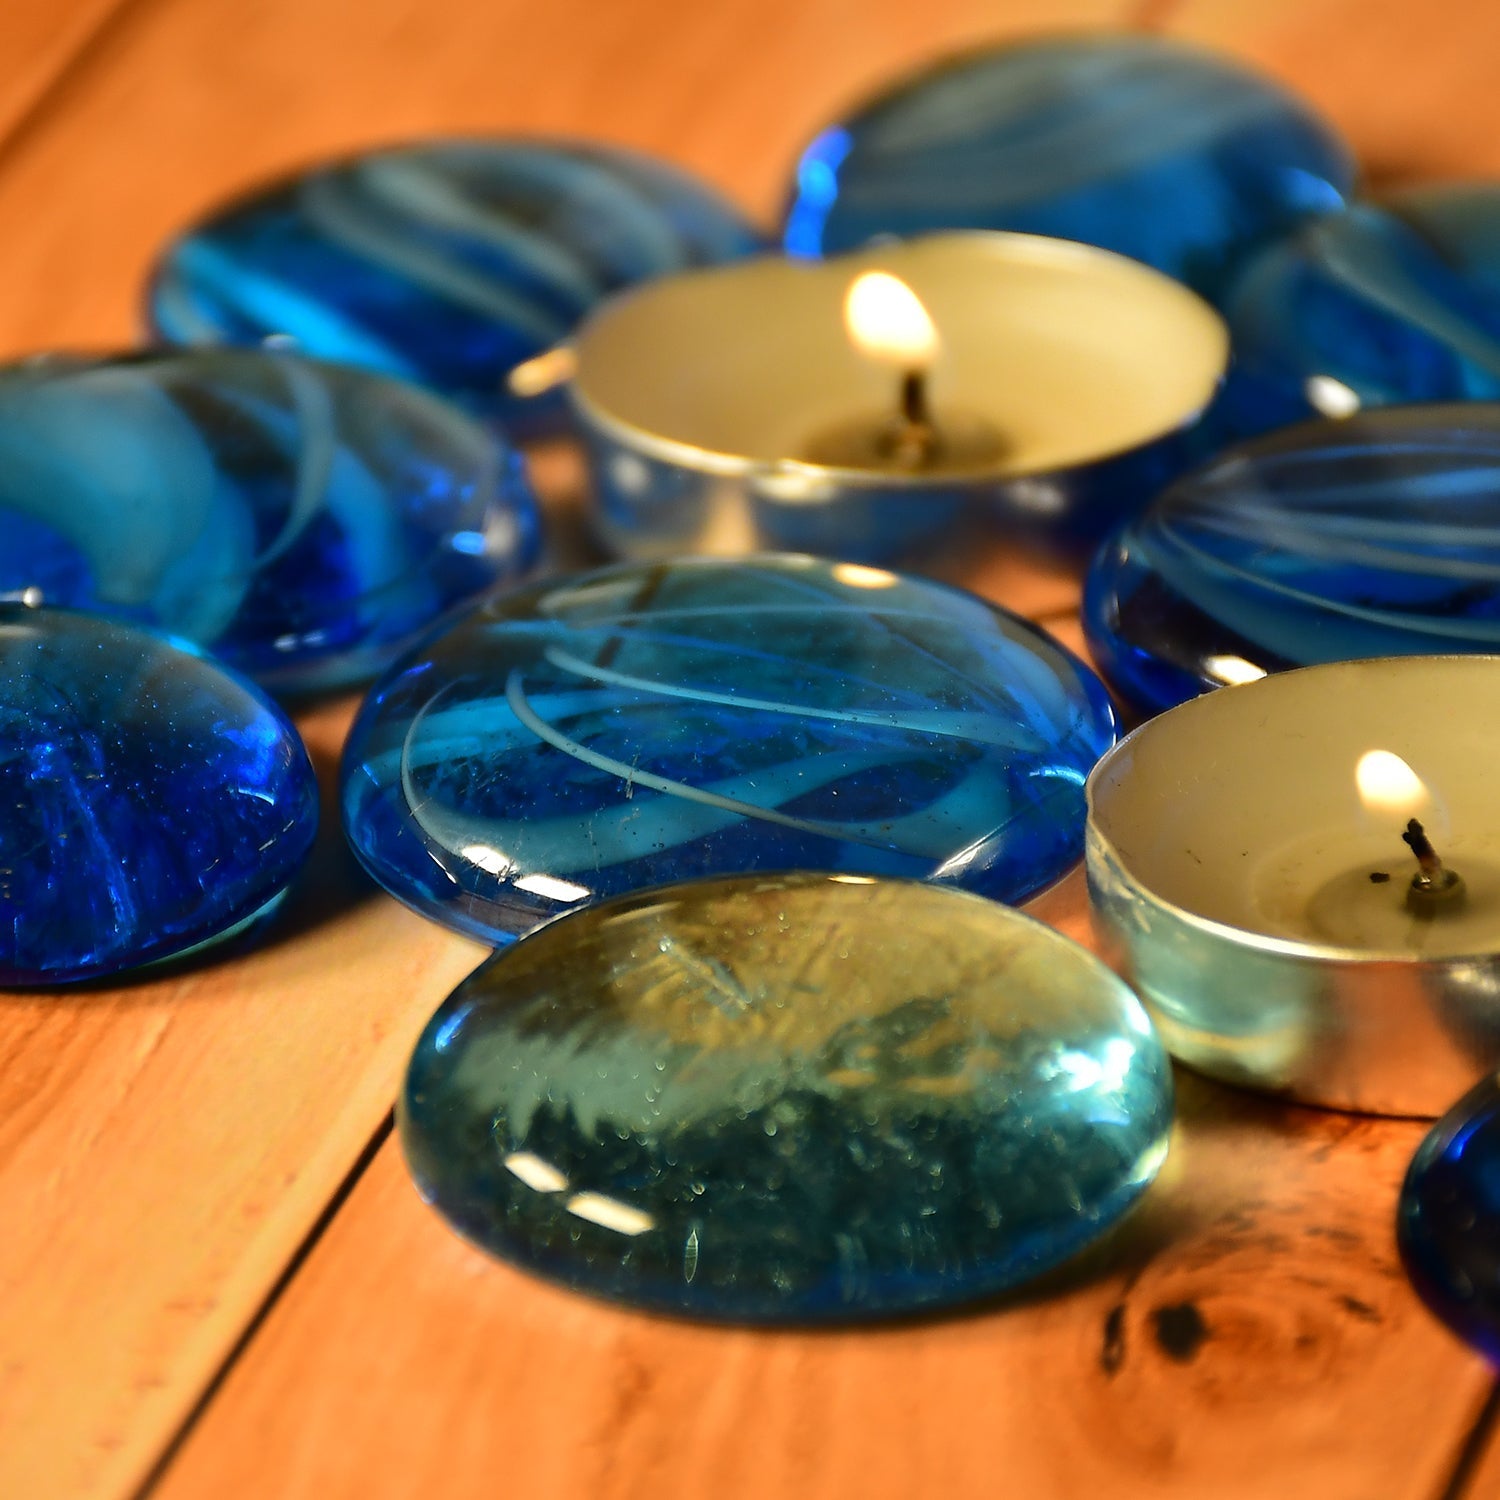 4014 Glass Gem Stone, Flat Round Marbles Pebbles for Vase Fillers, Attractive pebbles for Aquarium Fish Tank. DeoDap